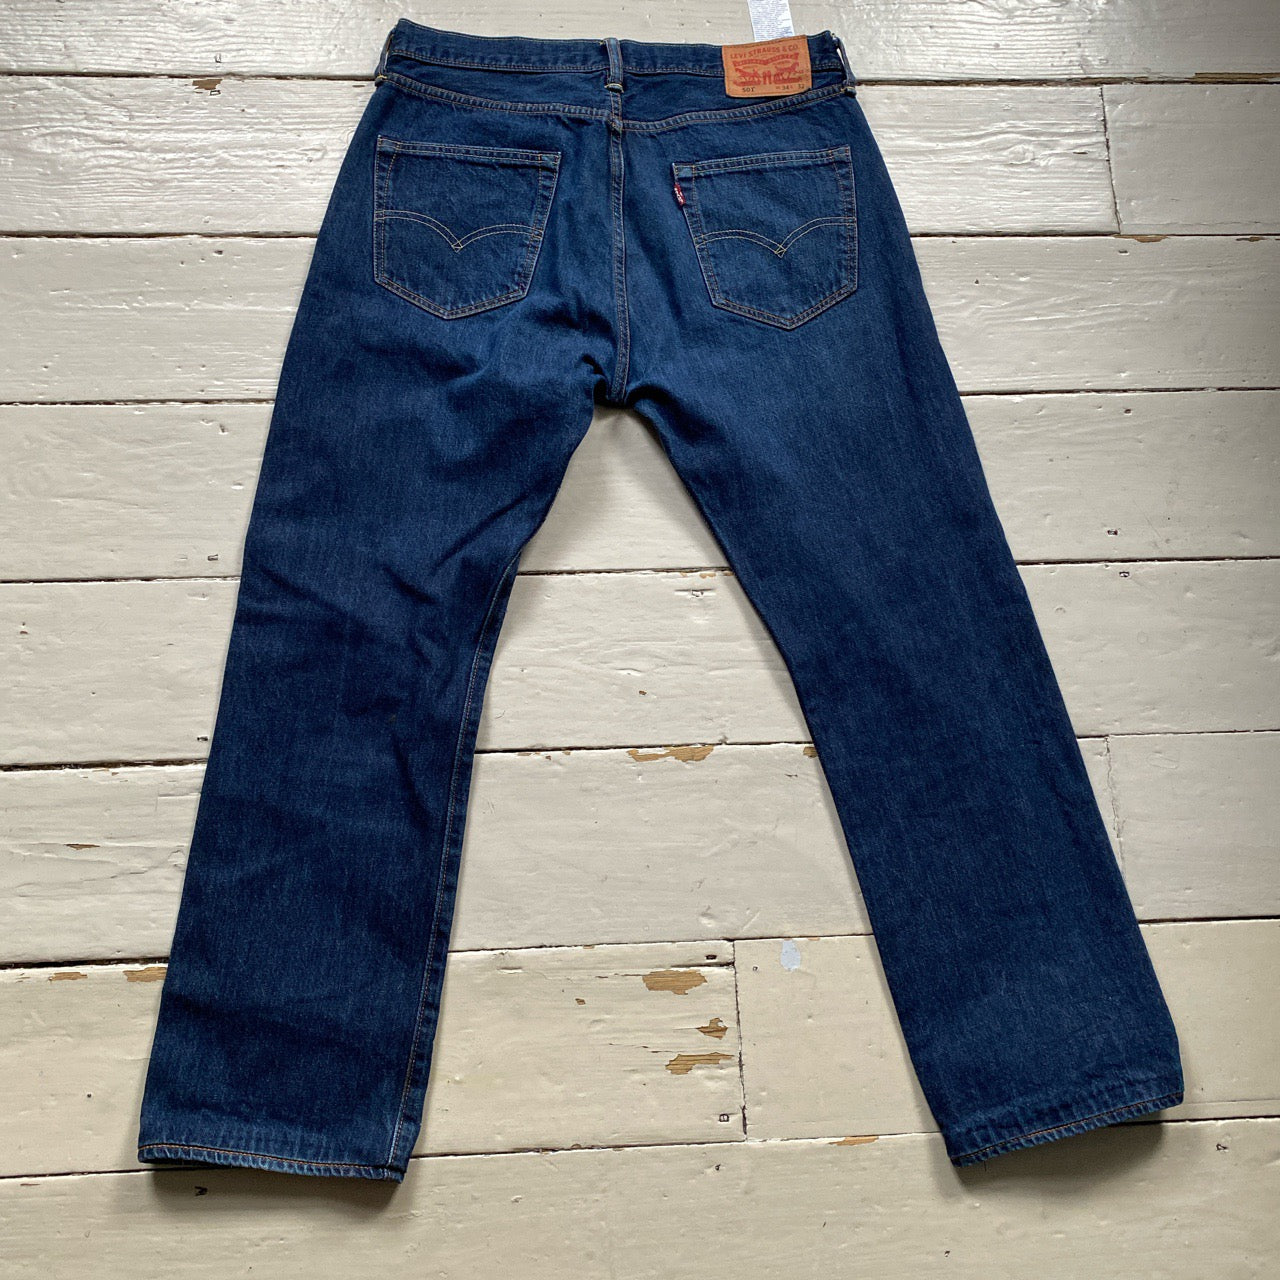 Levis 501 Navy Jeans (34/29)